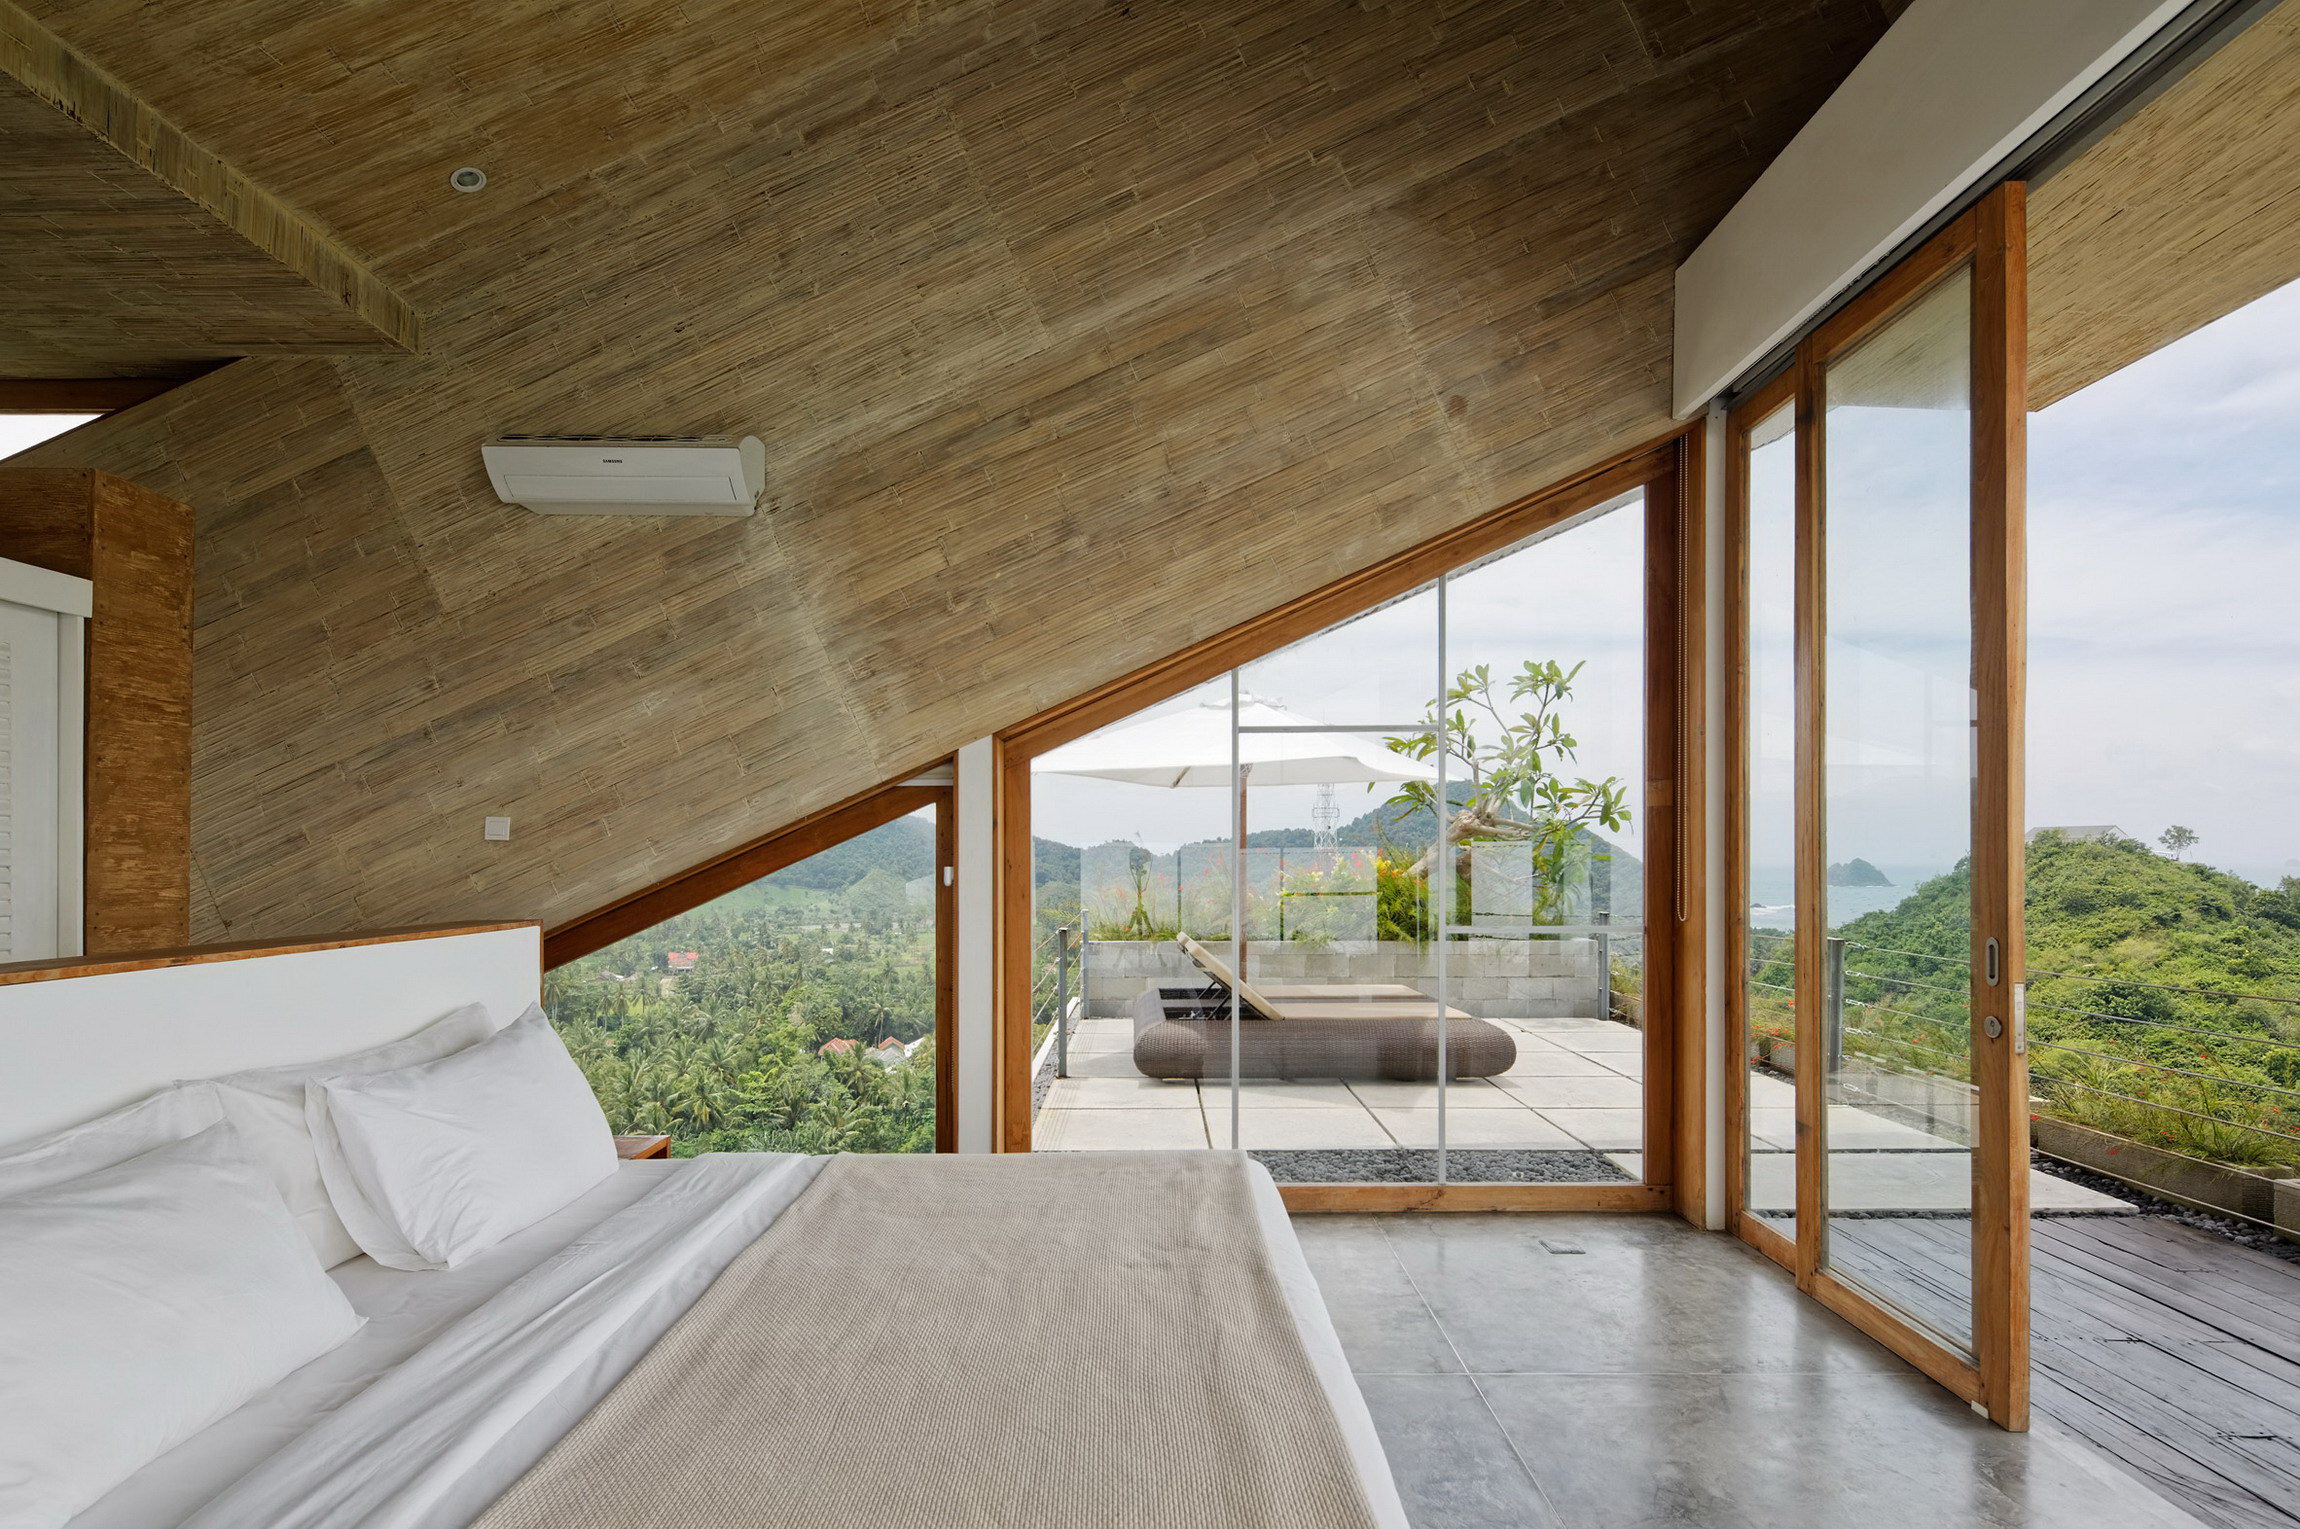 Clay House | Seven Heaven Residence by Budi Pradono Architects